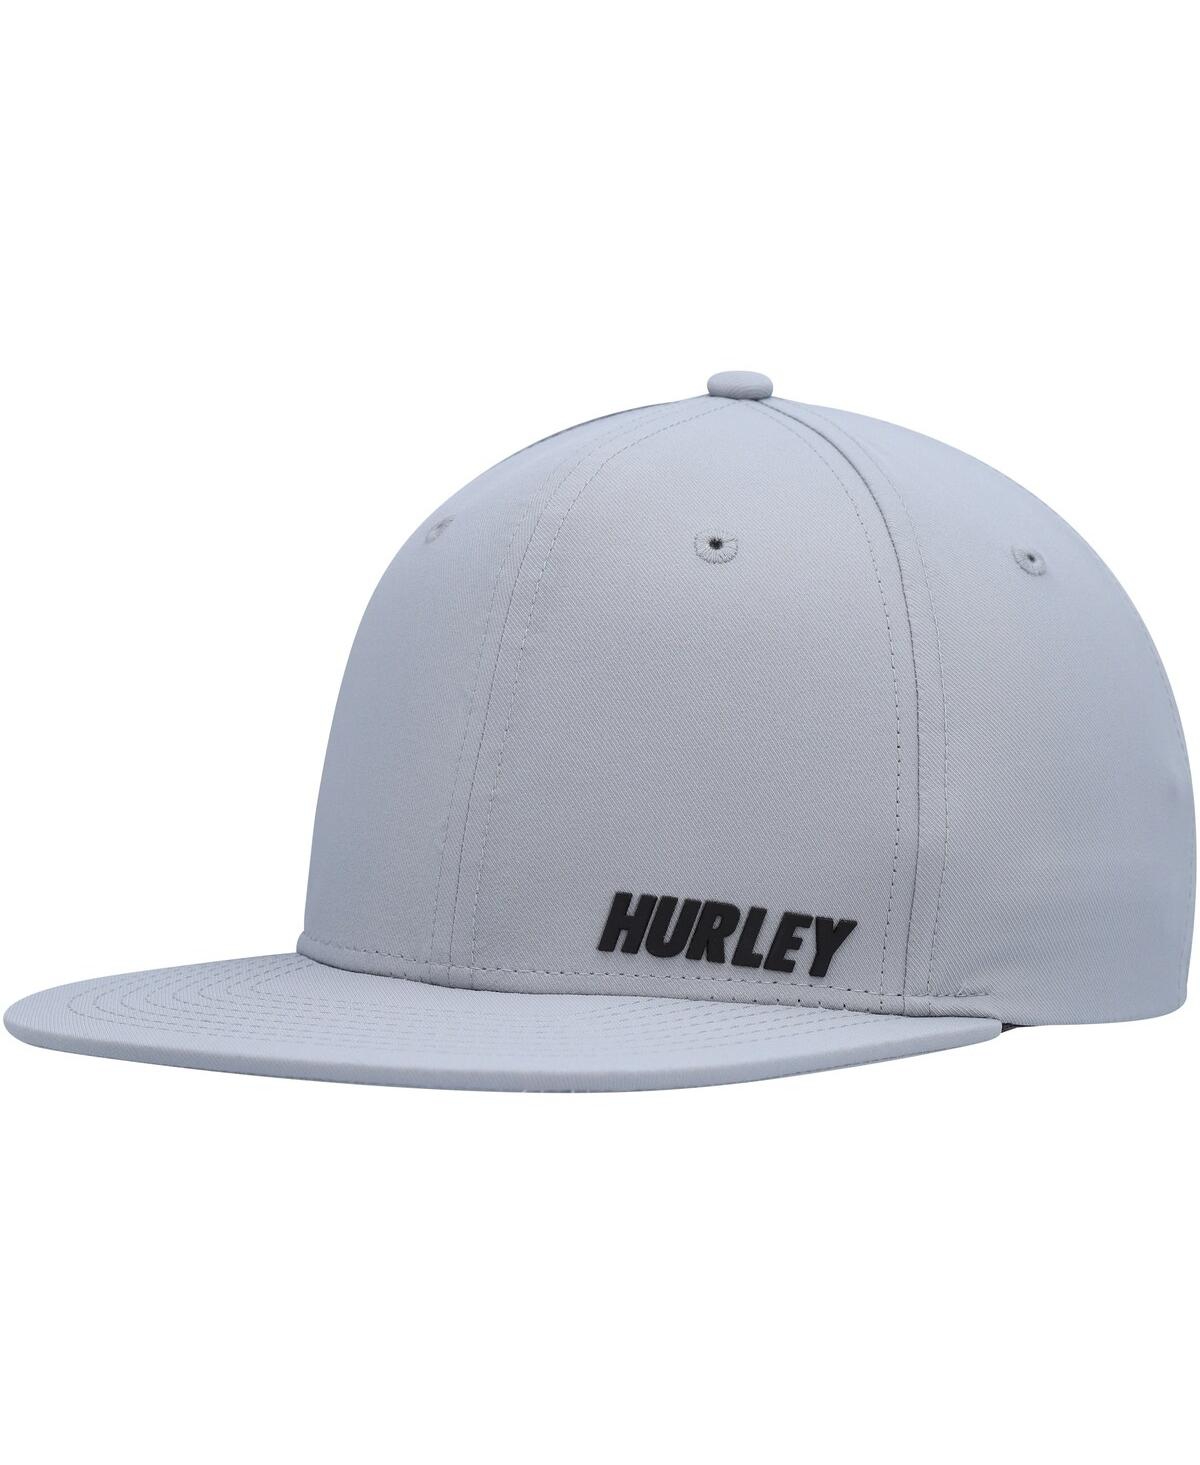 Men's Hurley Gray Phantom Ridge Zipperback Adjustable Hat - Gray